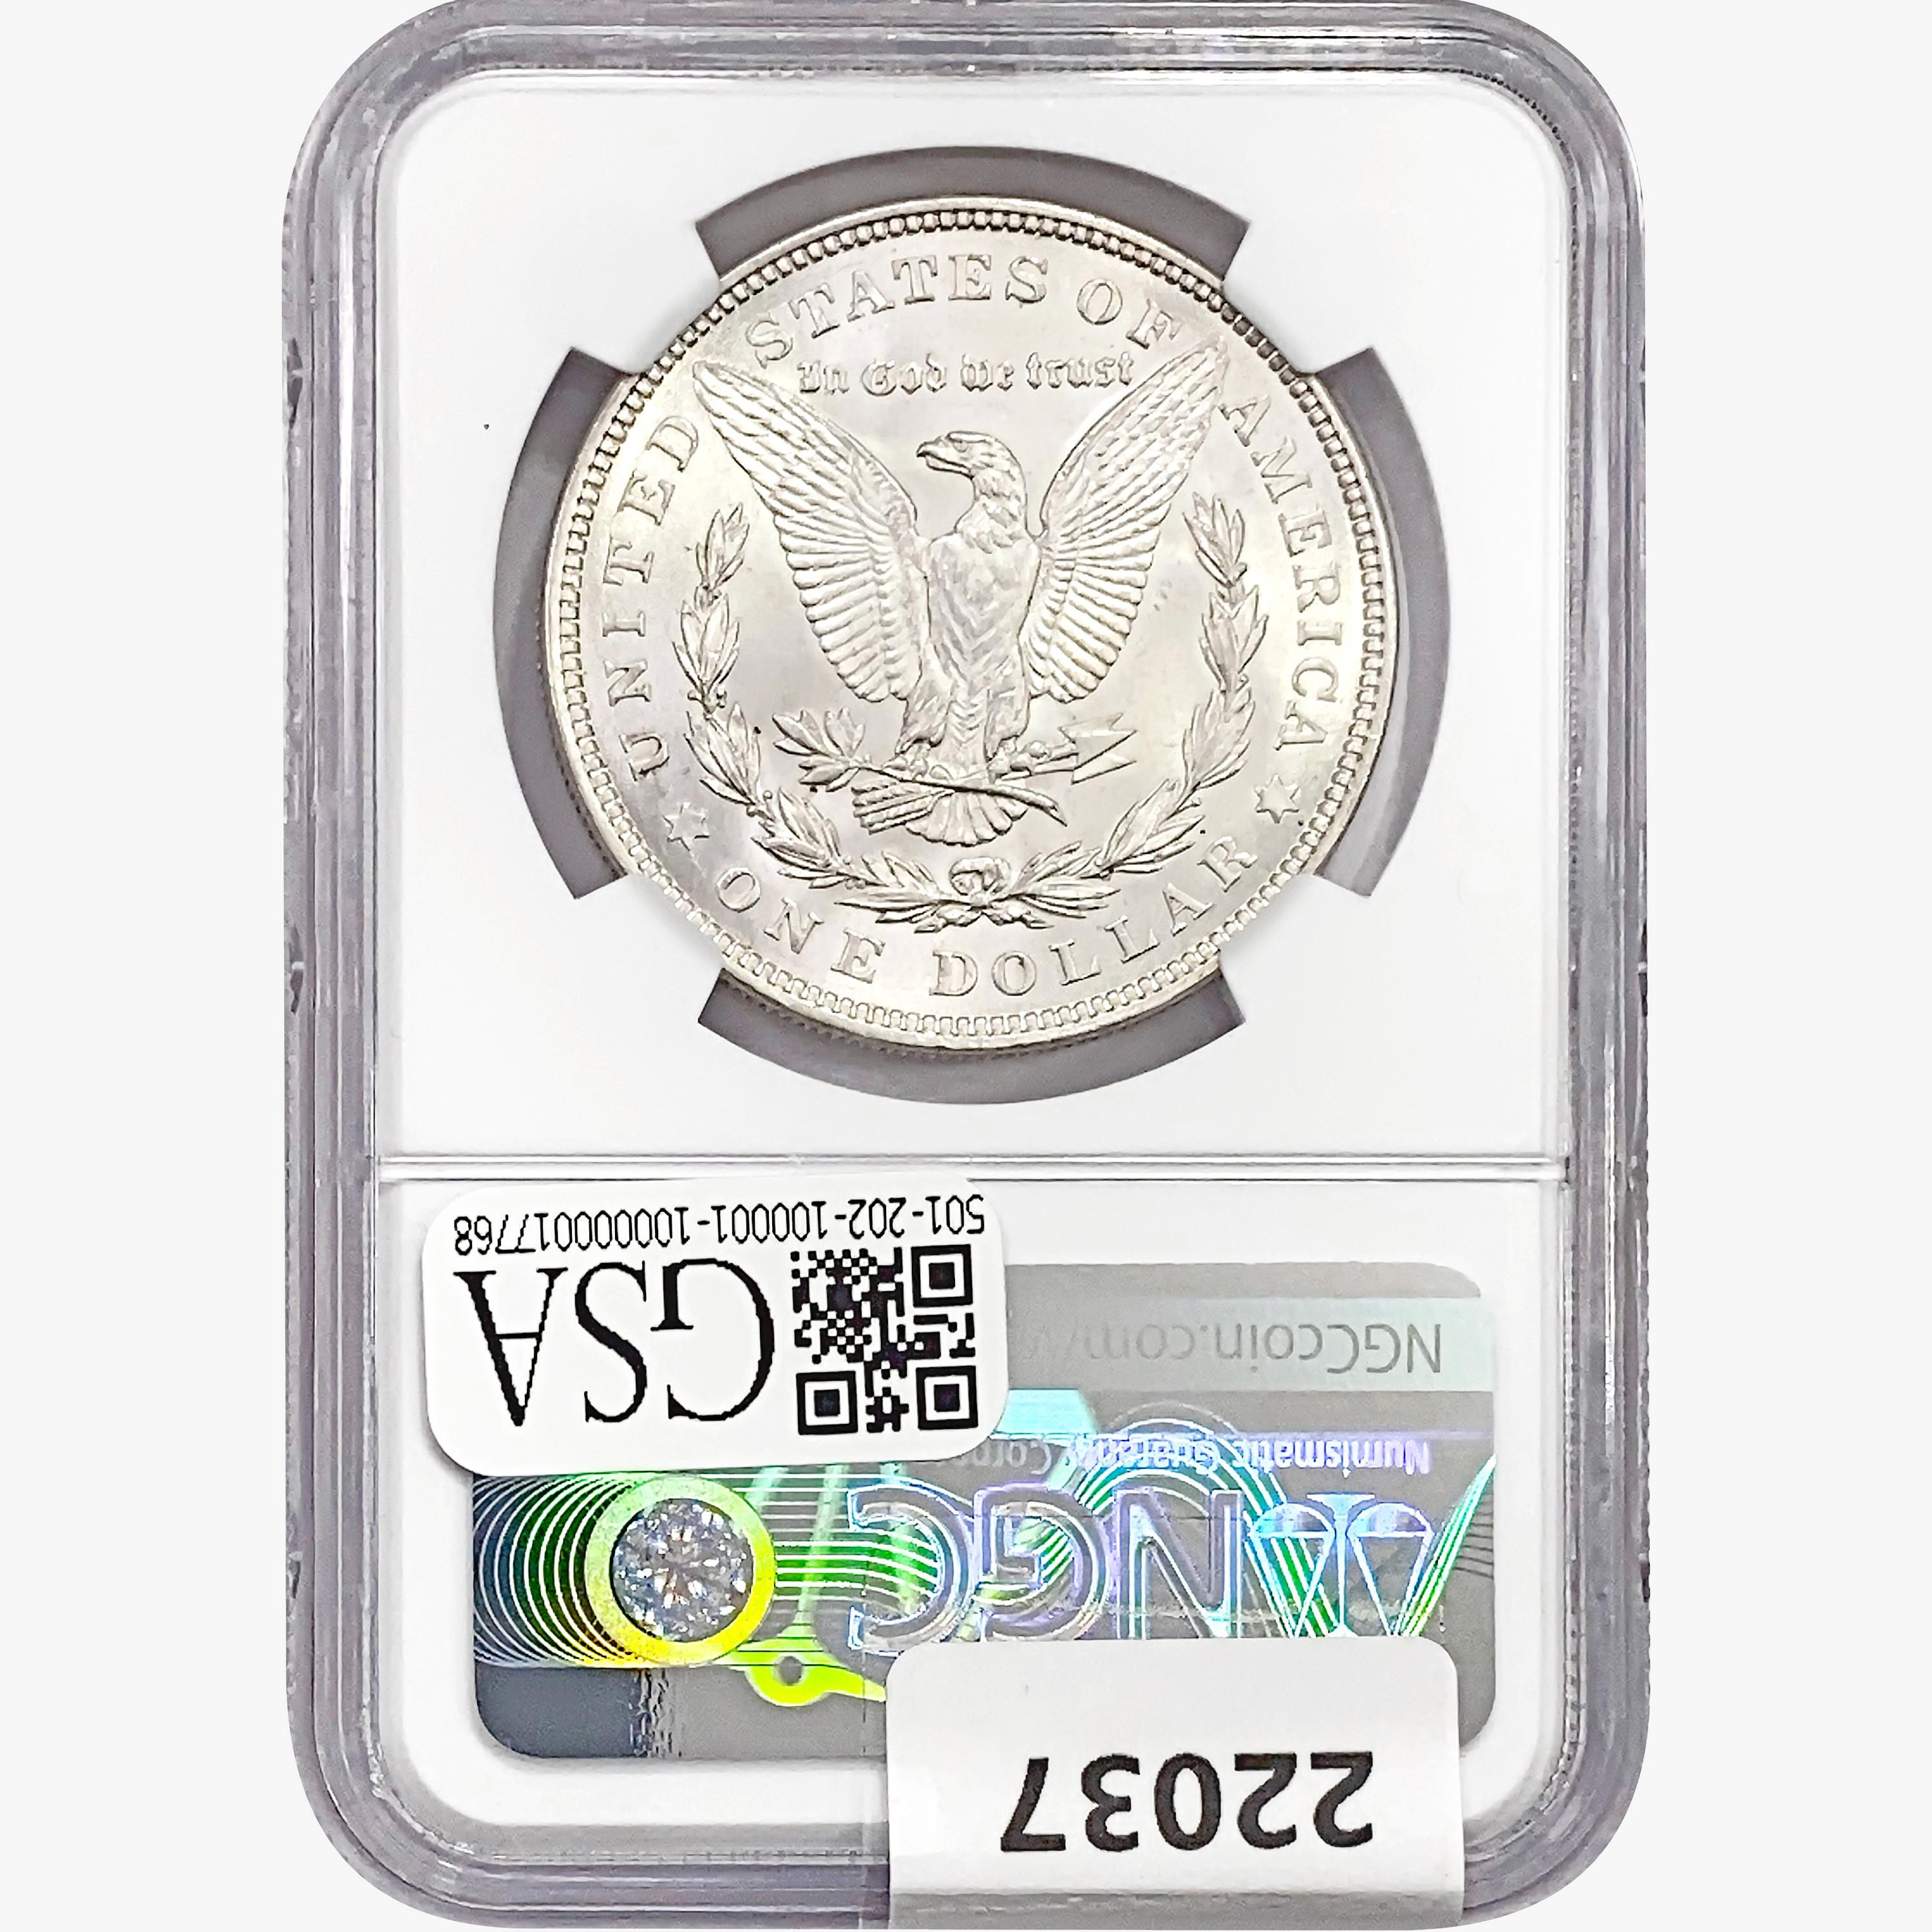 1921 Morgan Silver Dollar NGC MS64